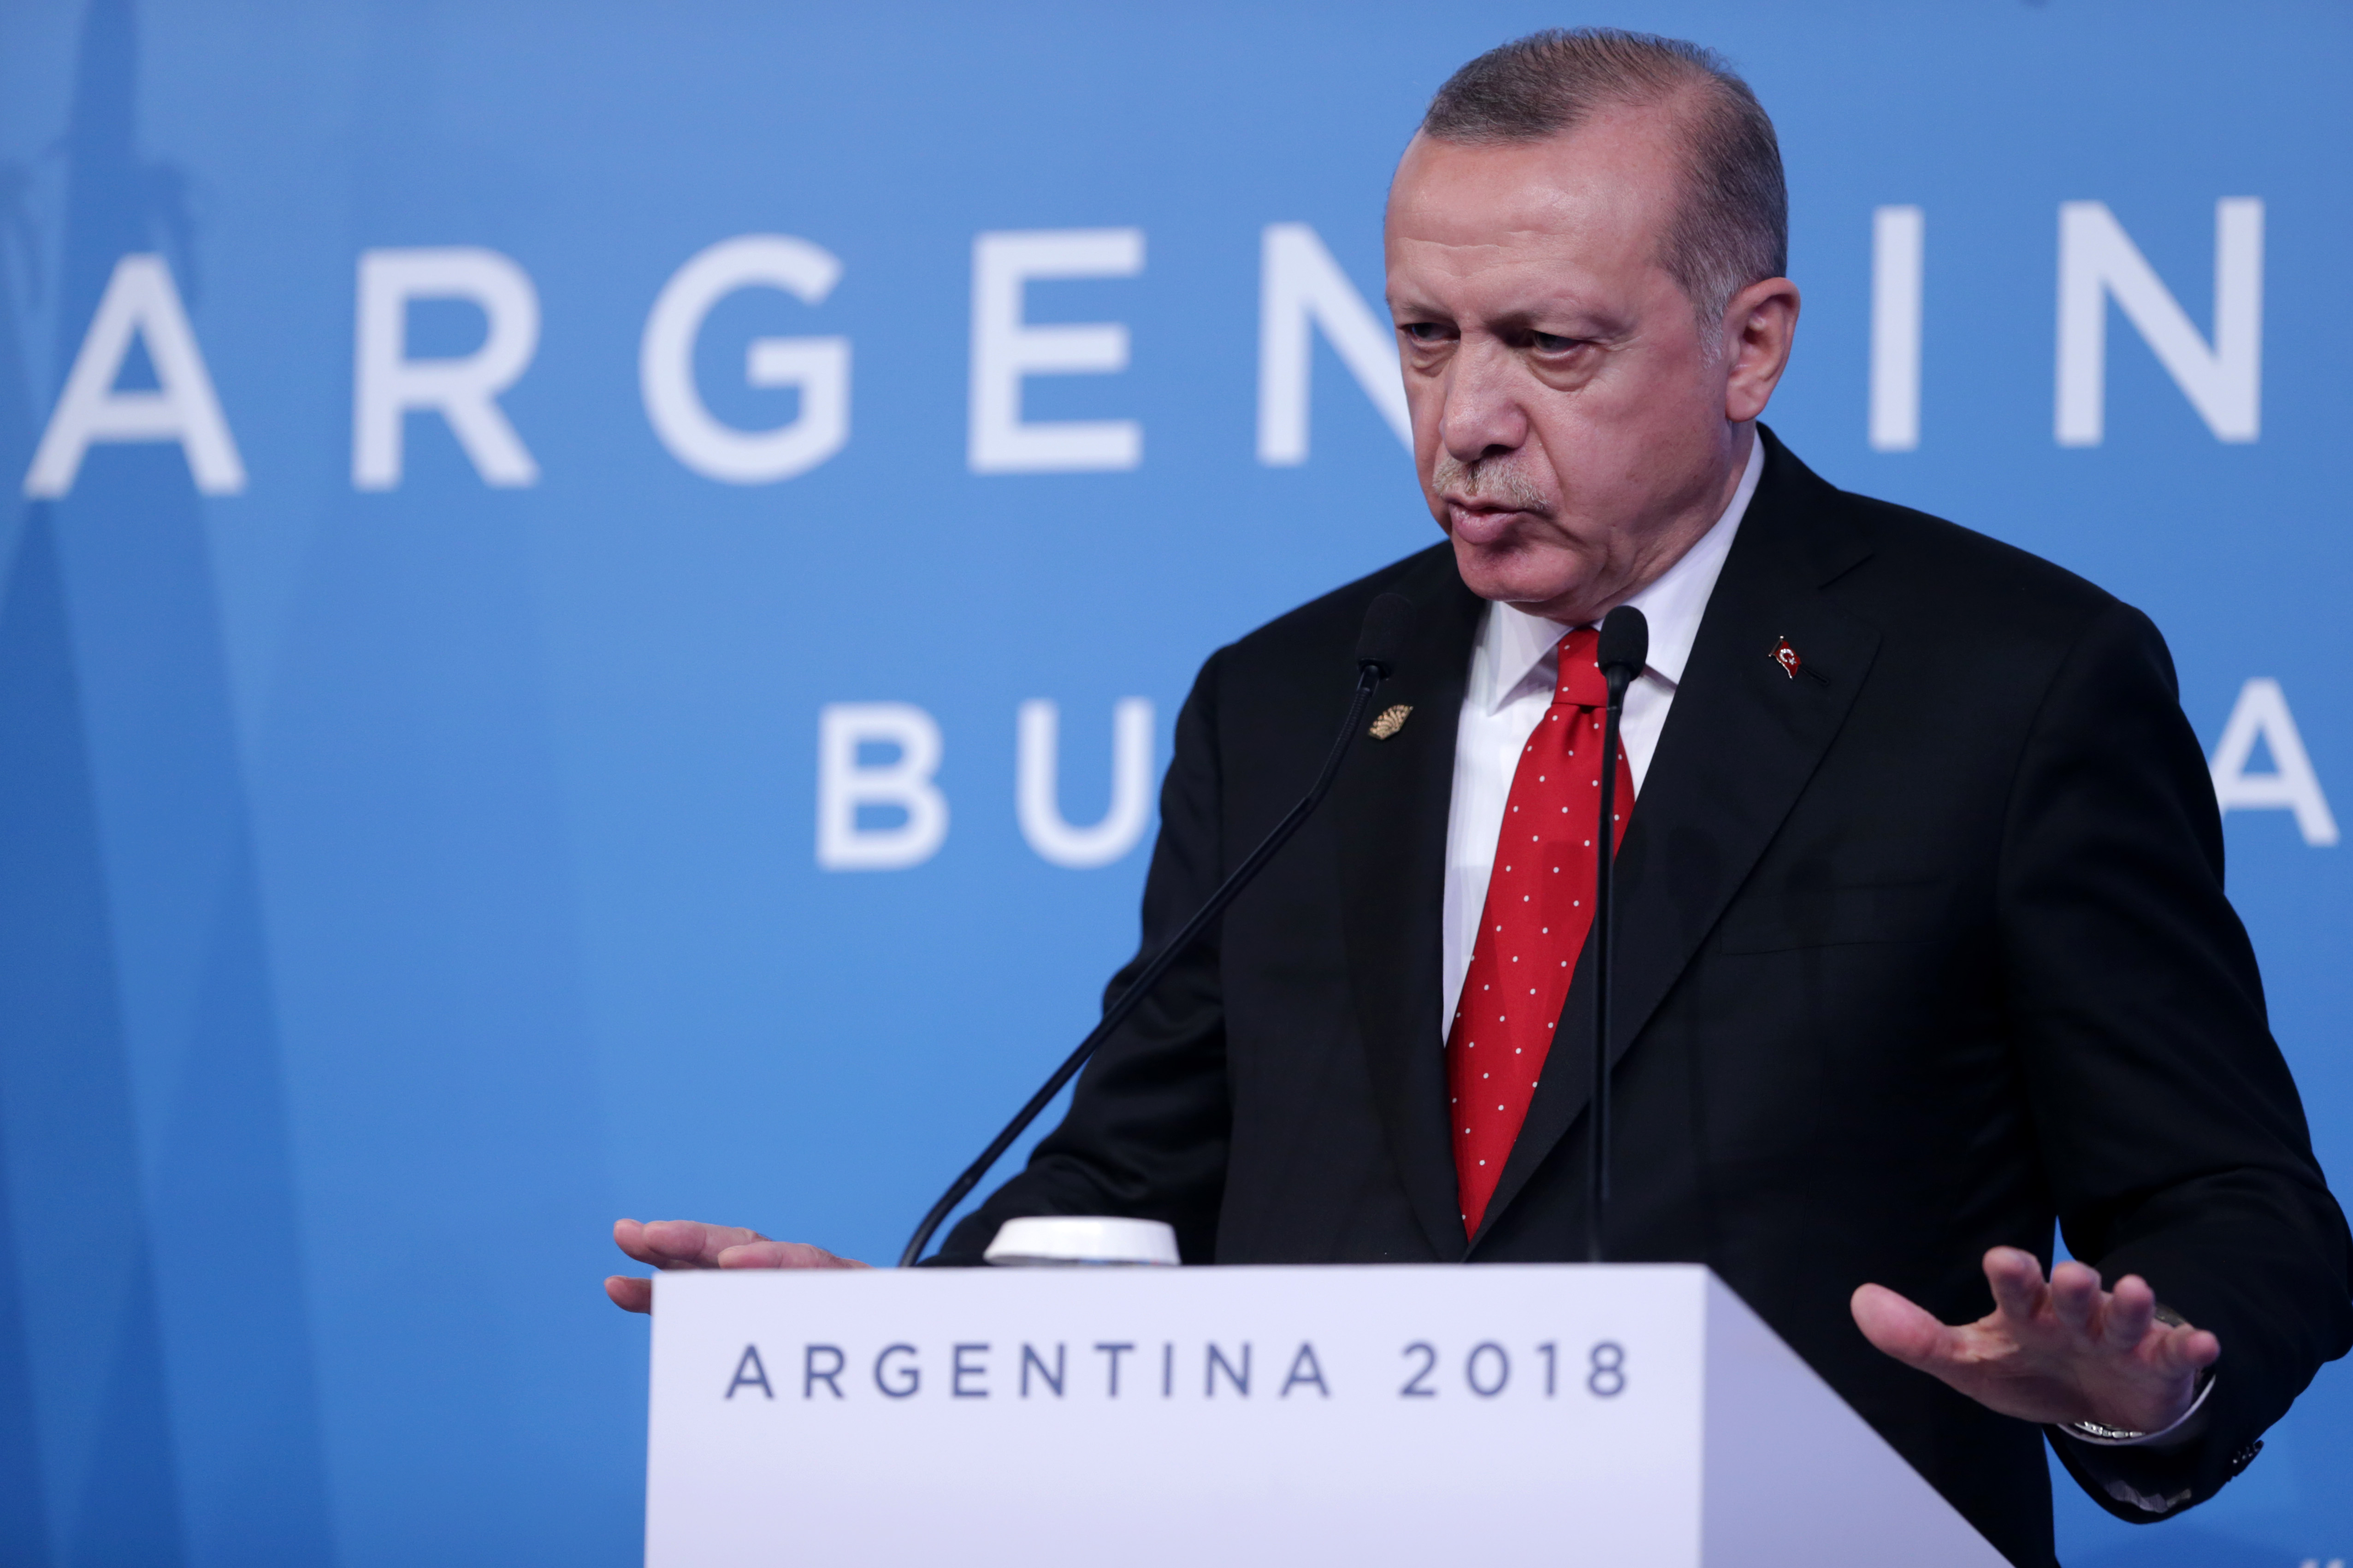 Turkish President Recep Tayyip Erdogan addresses the press during in Argentina on December 01, 2018.